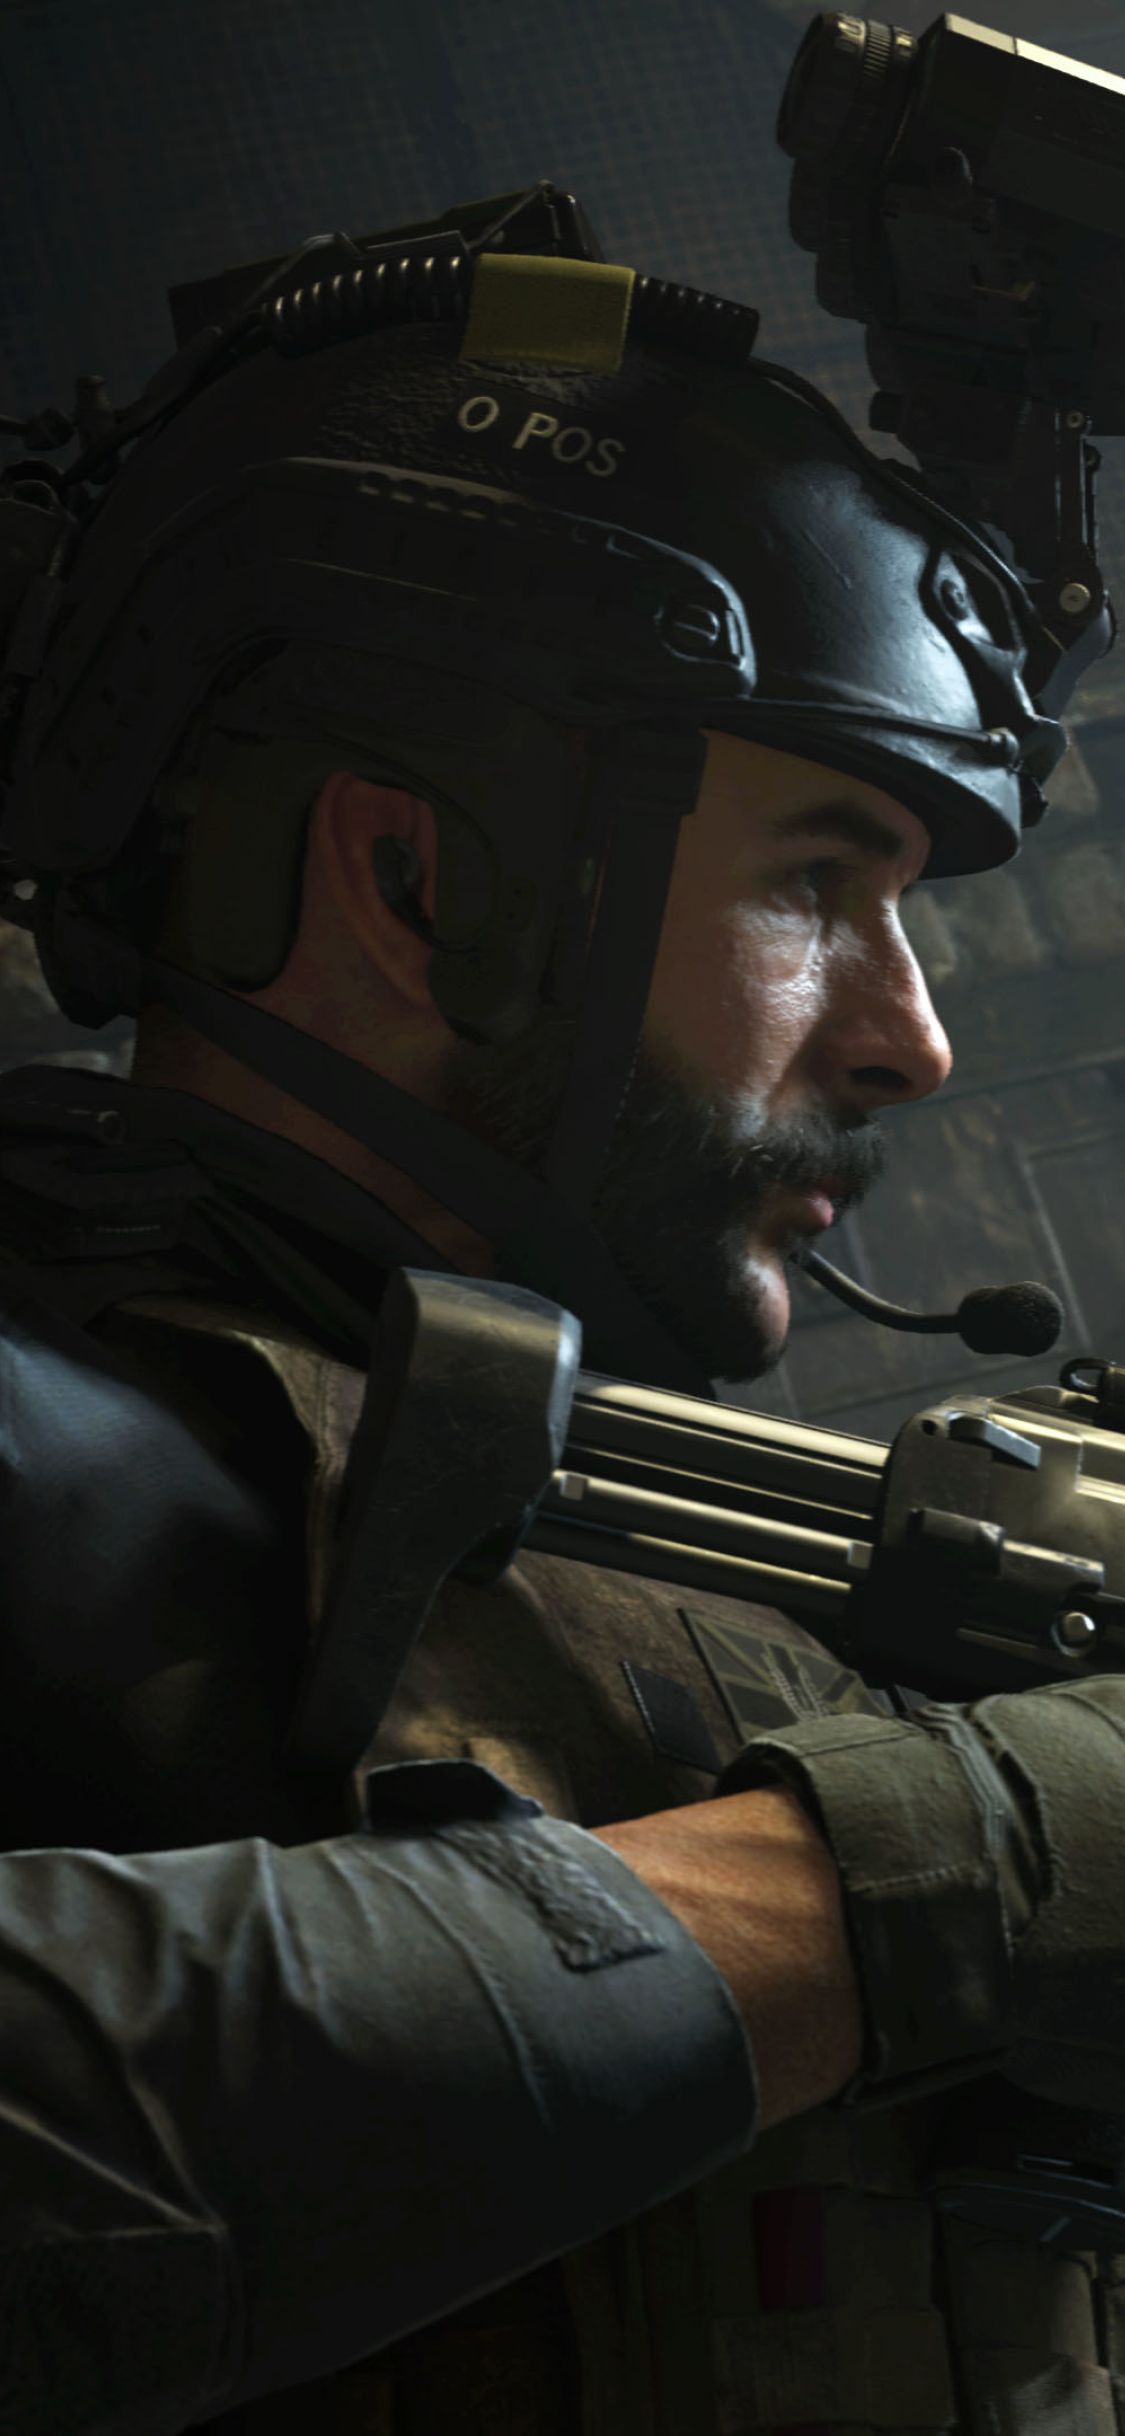 Call of Duty Modern Warfare Game 2019 iPhone XS, iPhone